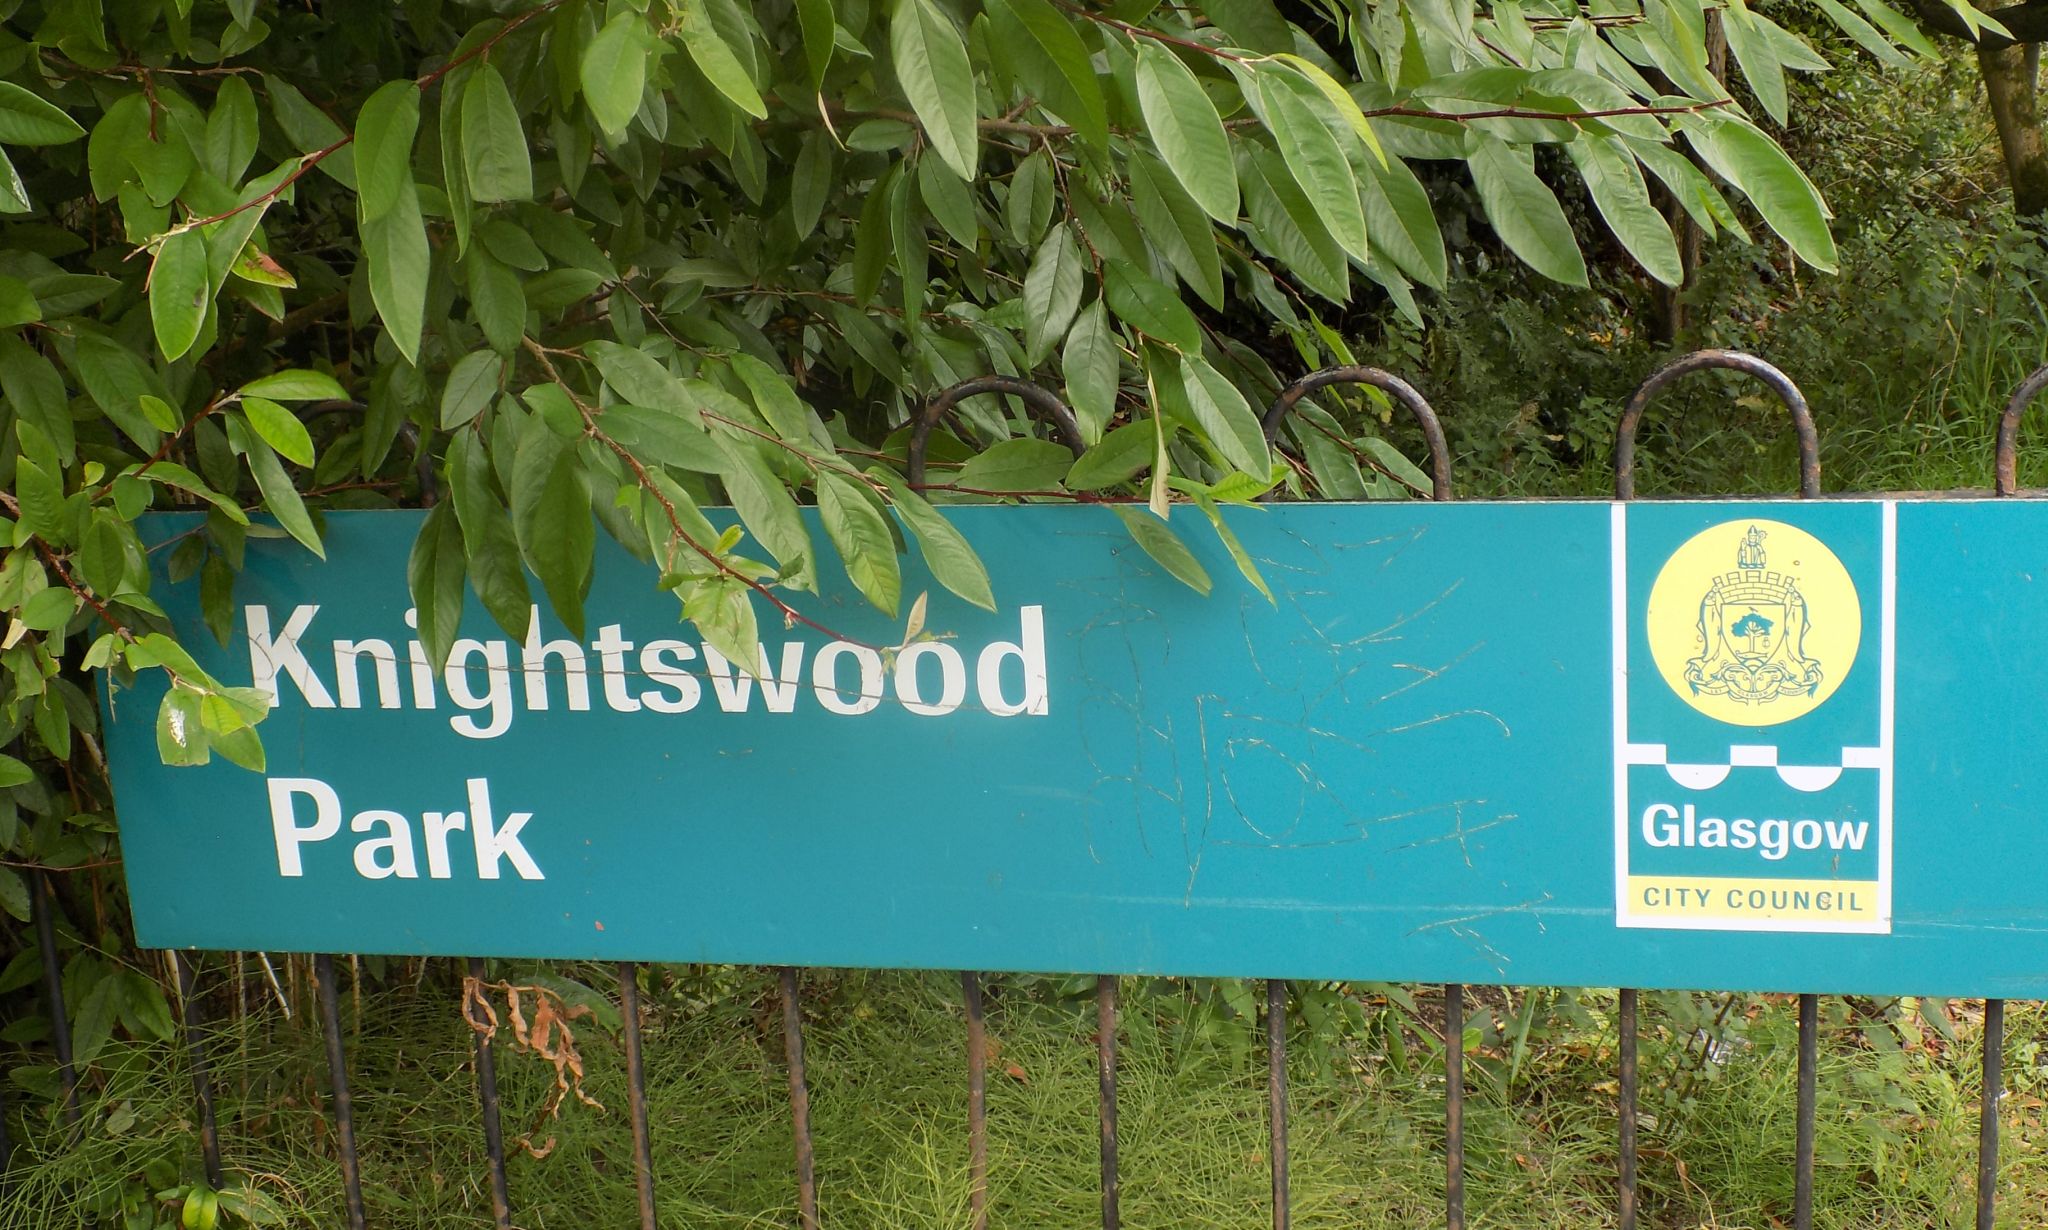 Knightswood Park